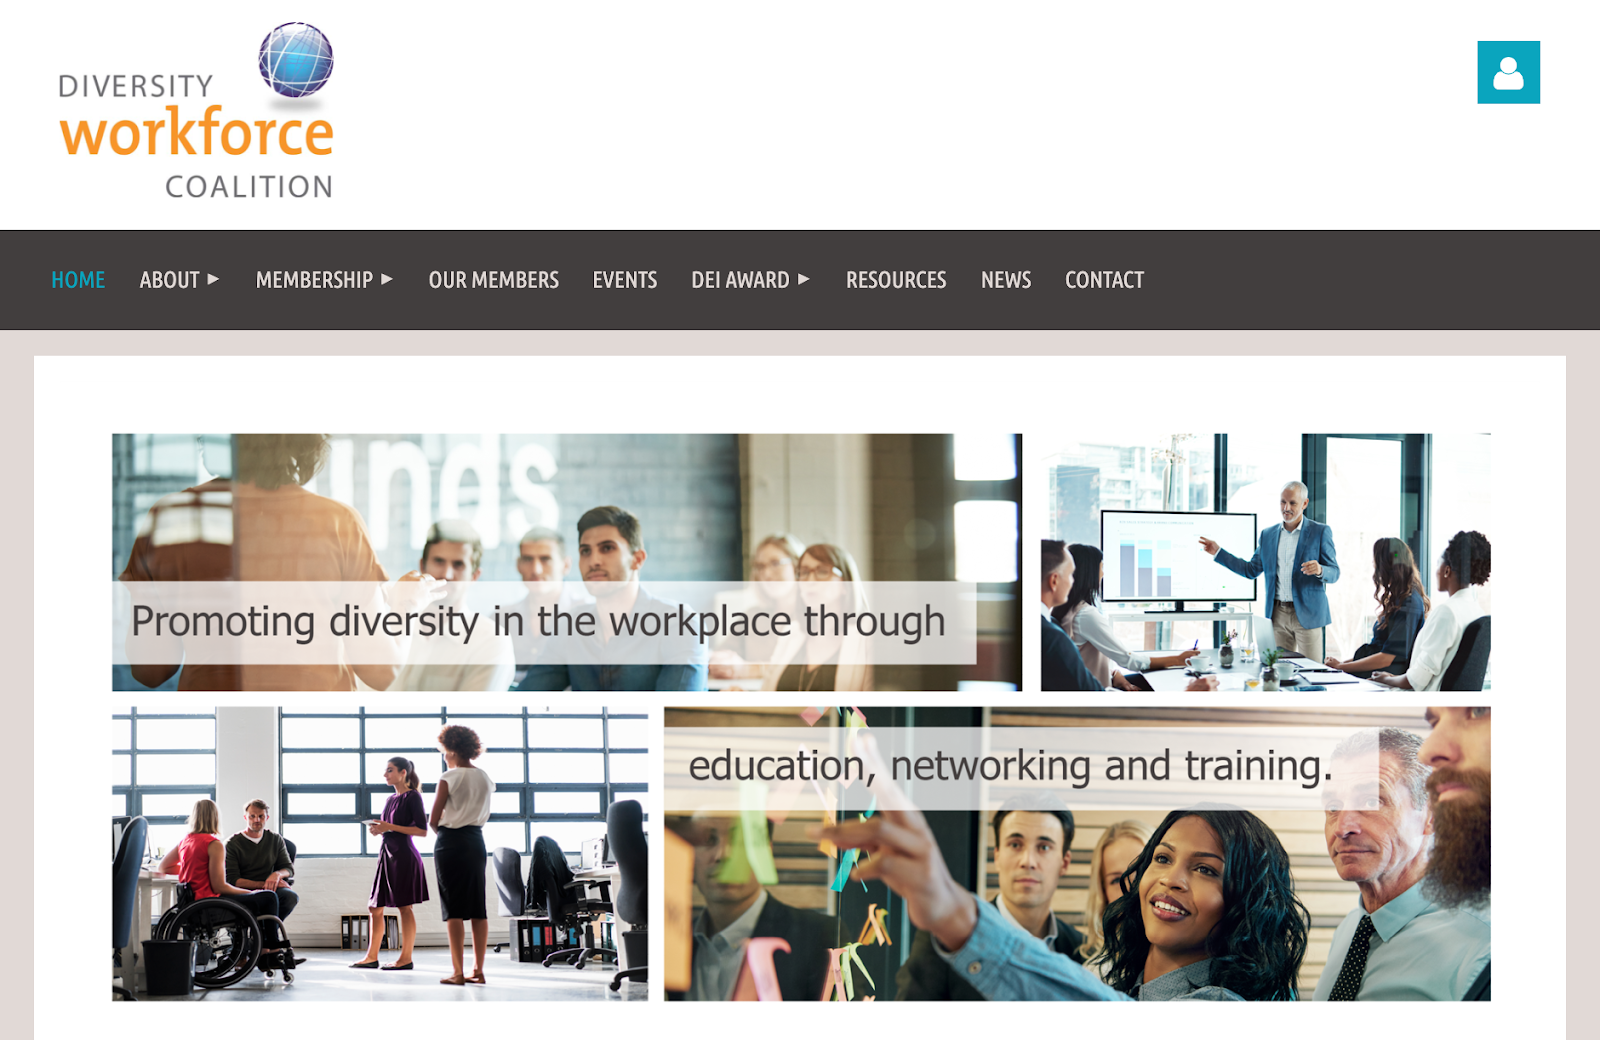 Diversity Workforce Coalition homepage